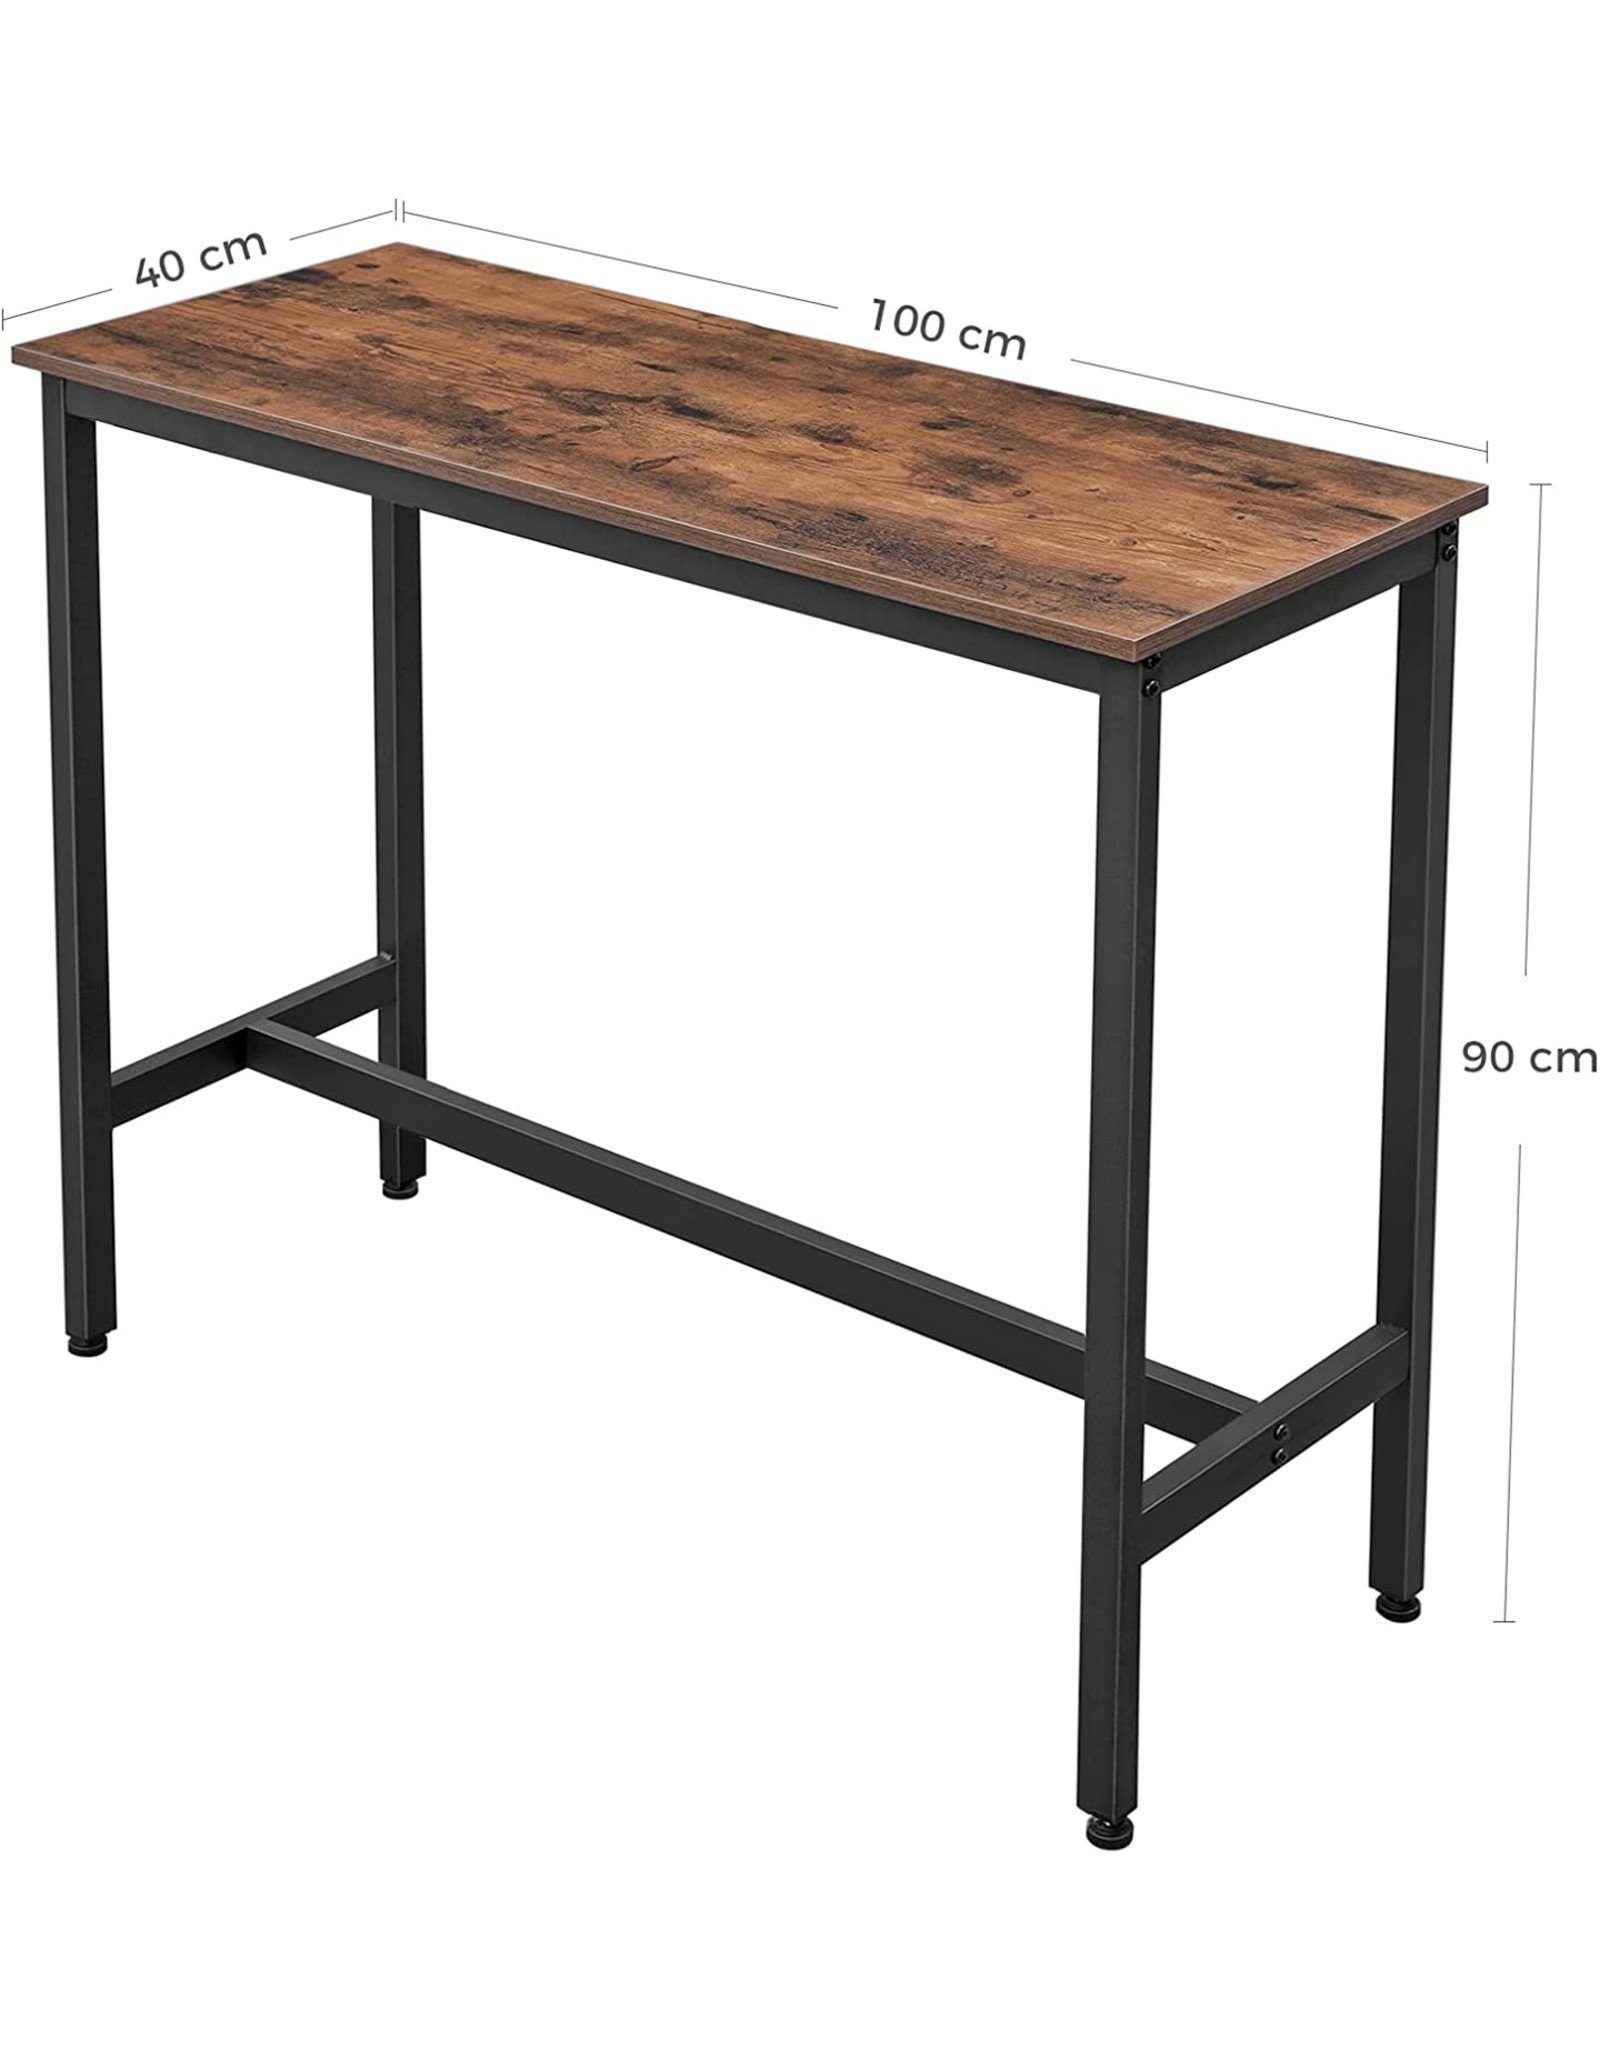 Parya Home Parya Home - Rectangular bar table - Narrow kitchen table - Robust Black Frame - 100 x 40 x 90 cm - Vintage - Brown